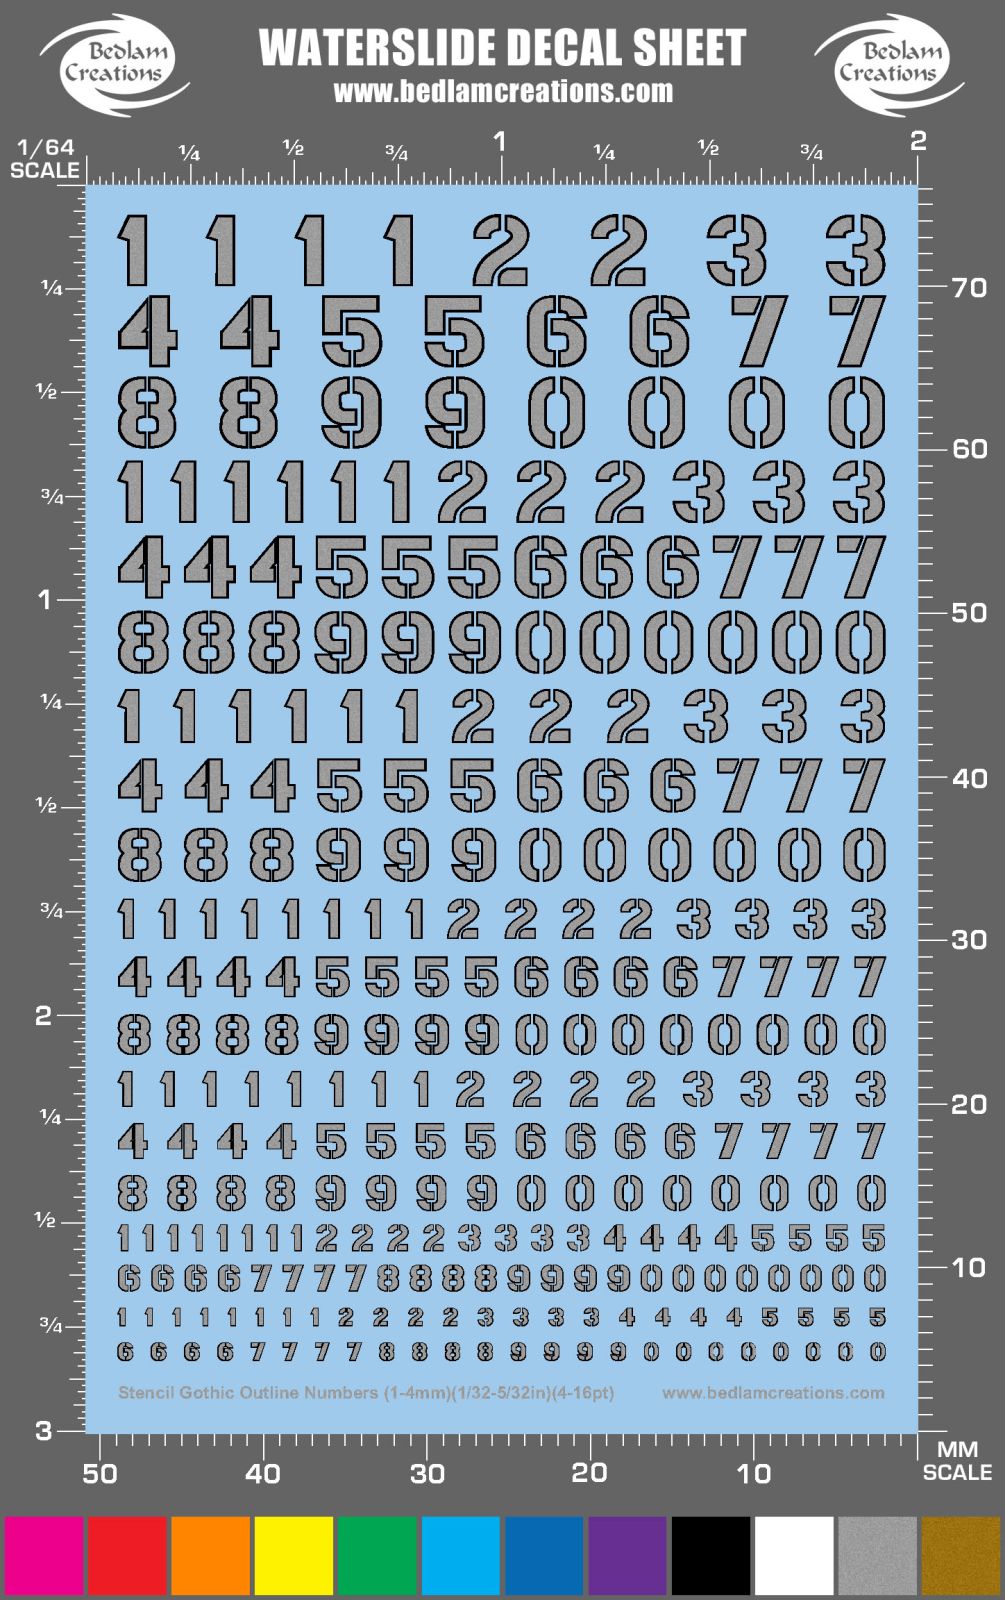 Super Detail Up Arial narrow Font Numbers Model Kit Water Slide Decal Black 